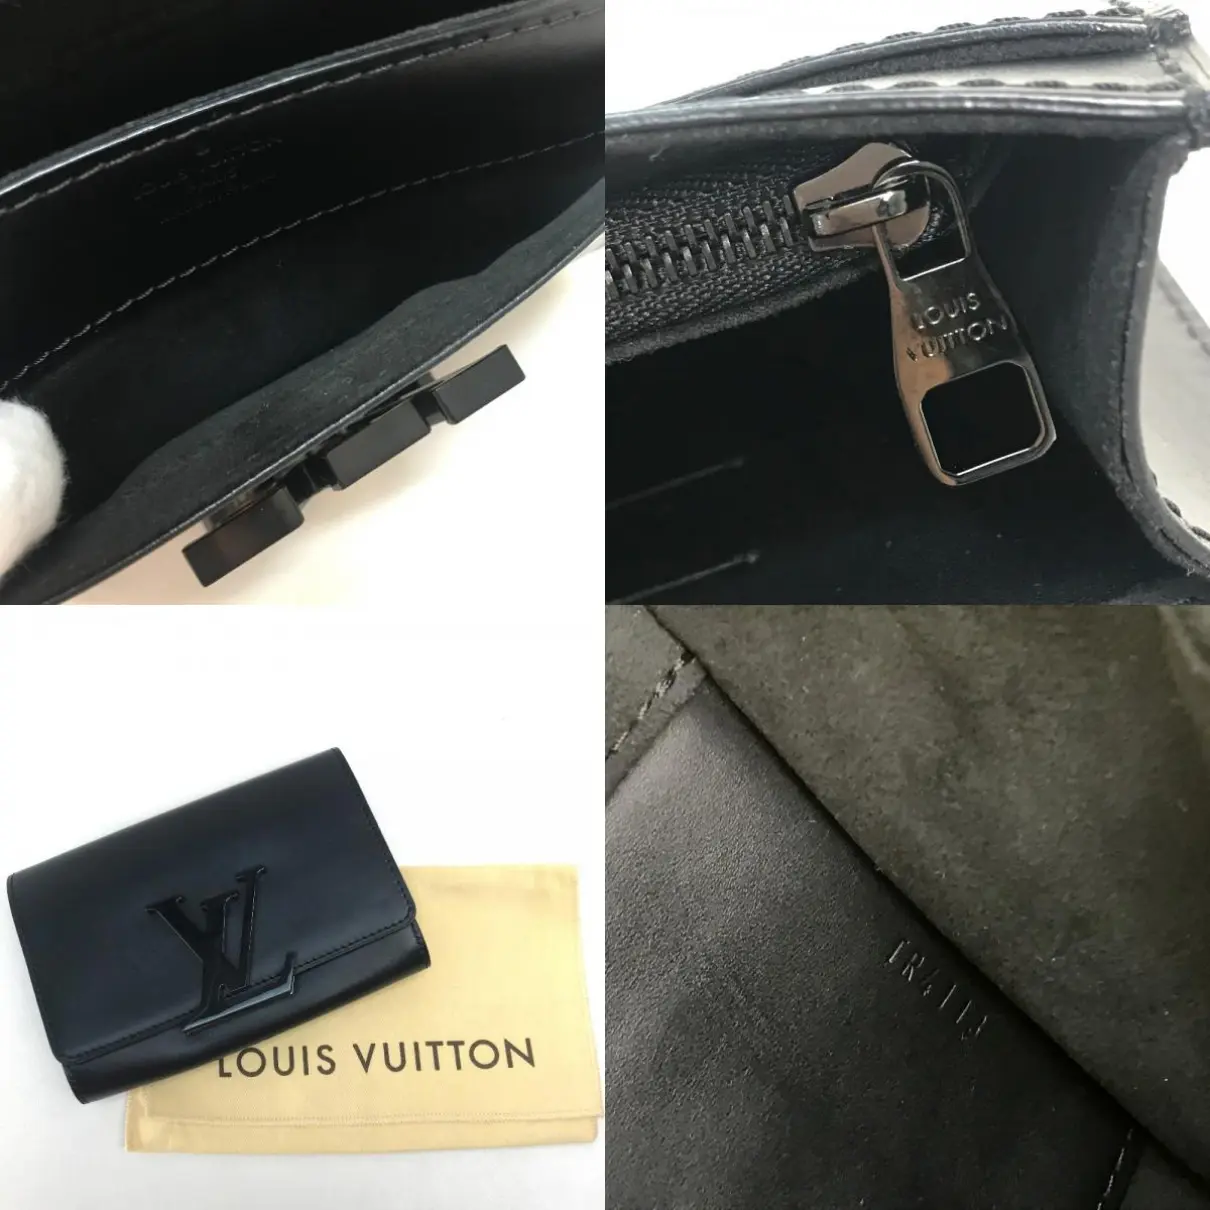 Buy Louis Vuitton Louise leather clutch bag online